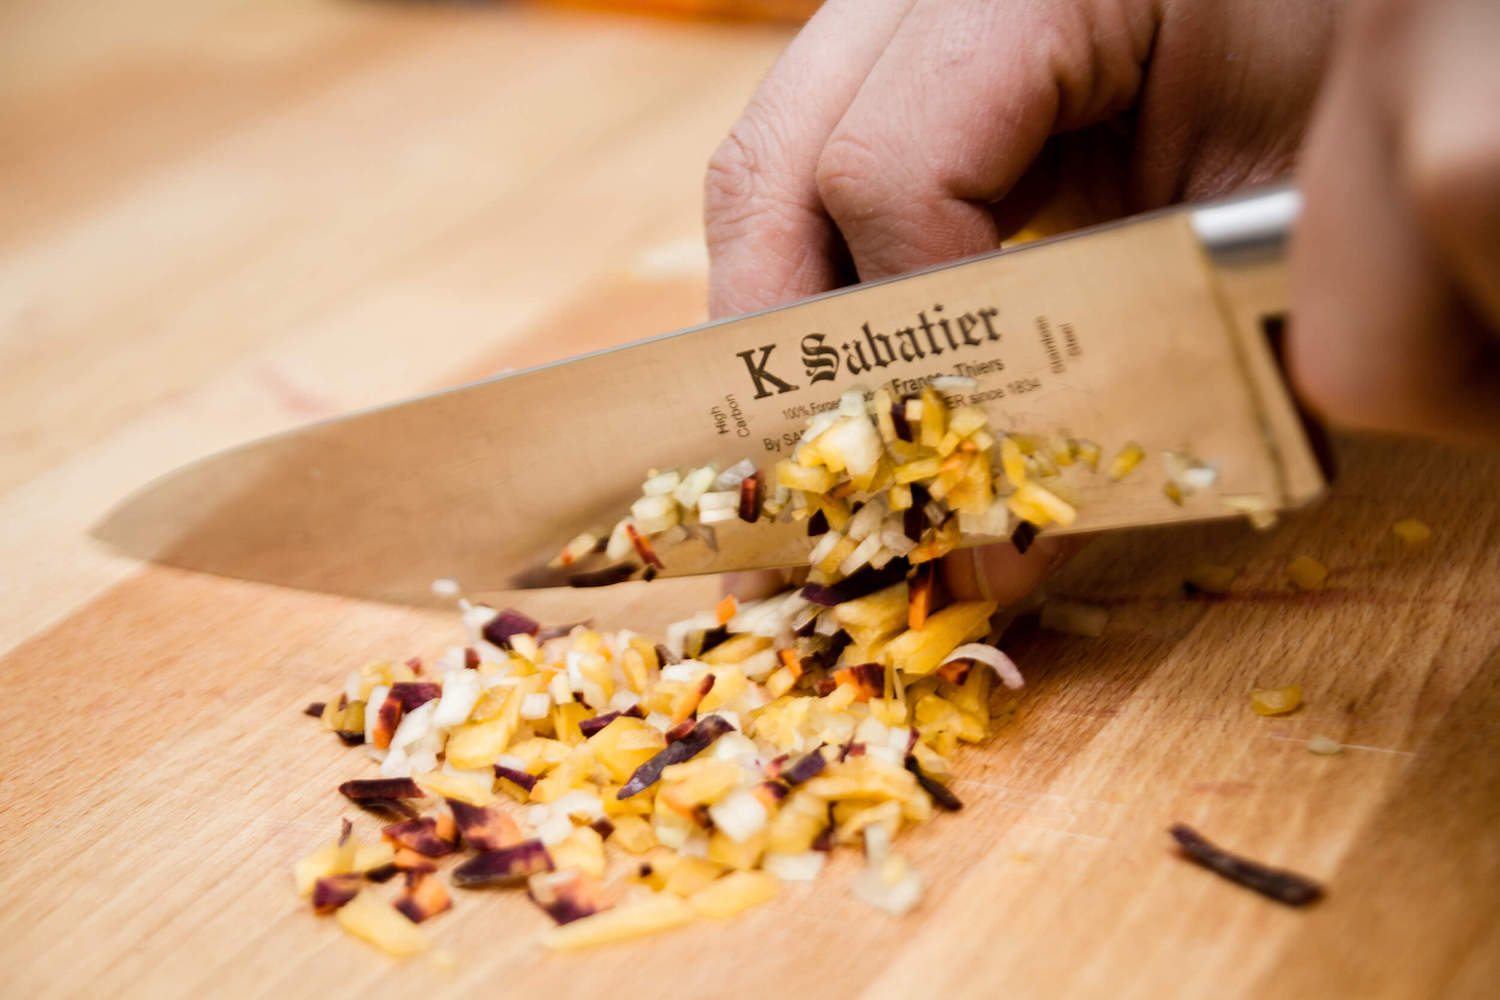 K sabatier kitchen knife